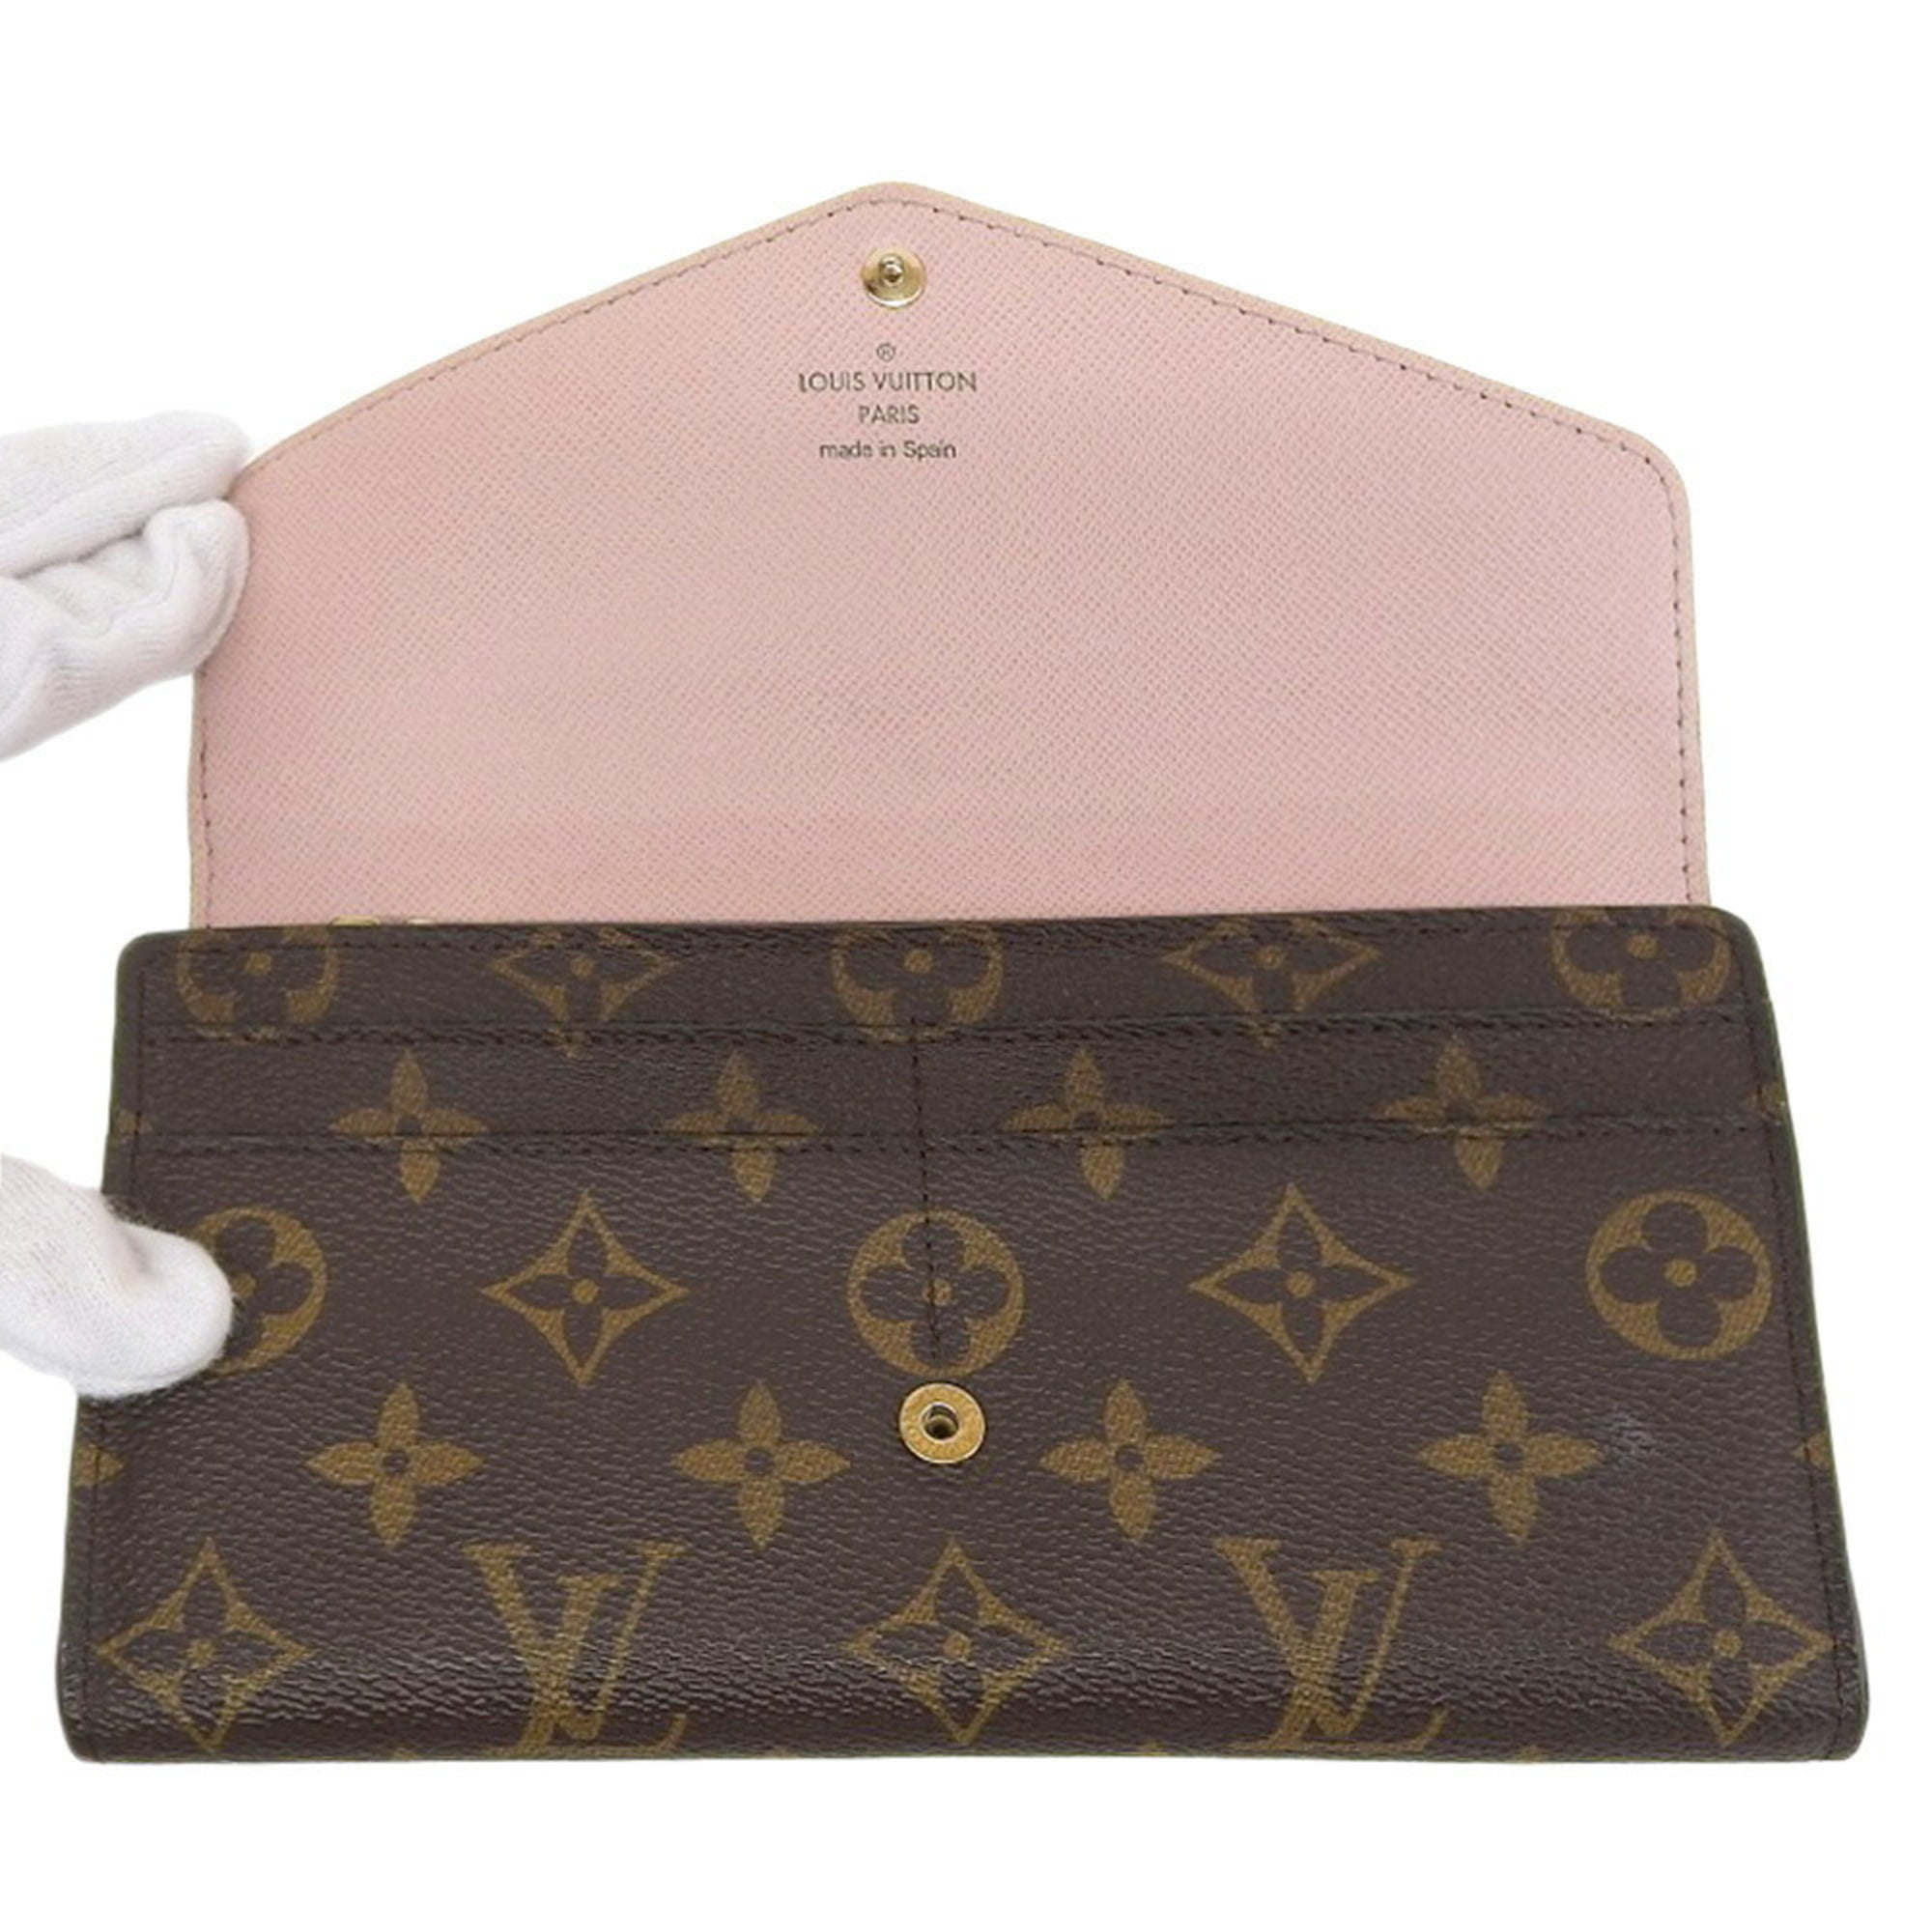 LOUIS VUITTON Portefeuille Lock Mini M80088 Pink/Gold Hardware Women's  Wallet 